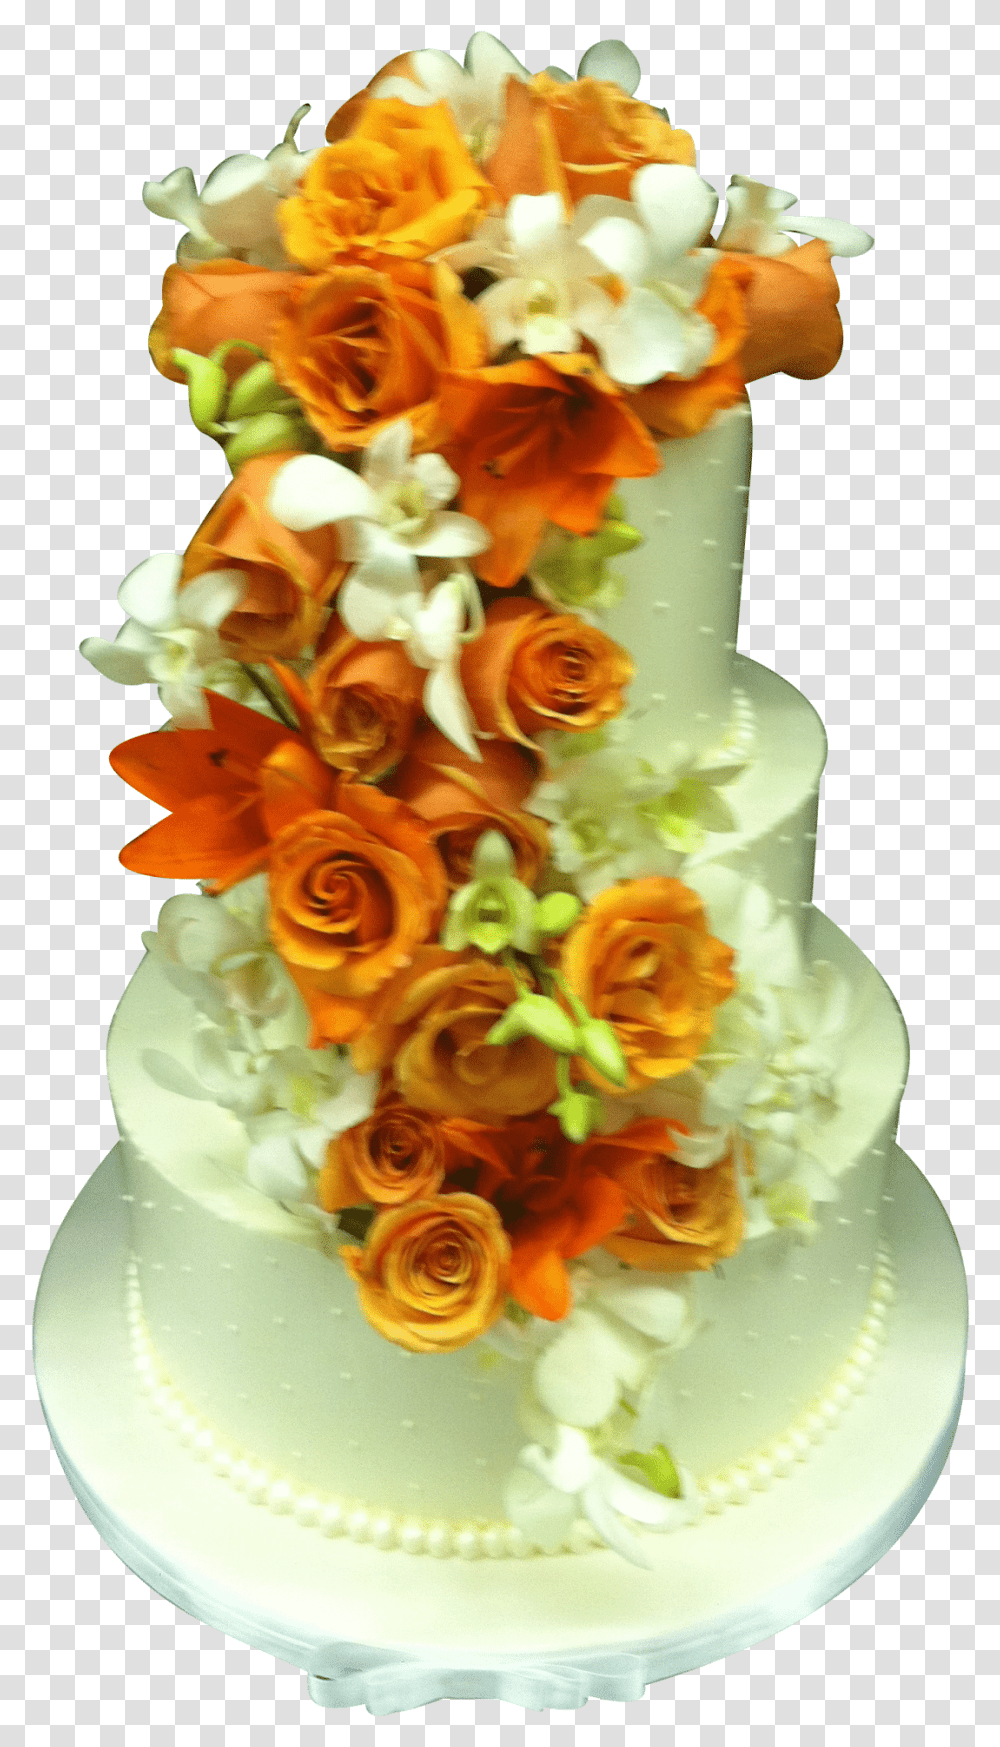 Flower Drape Wedding Cake Cake Decorating, Dessert, Food, Plant, Flower Bouquet Transparent Png